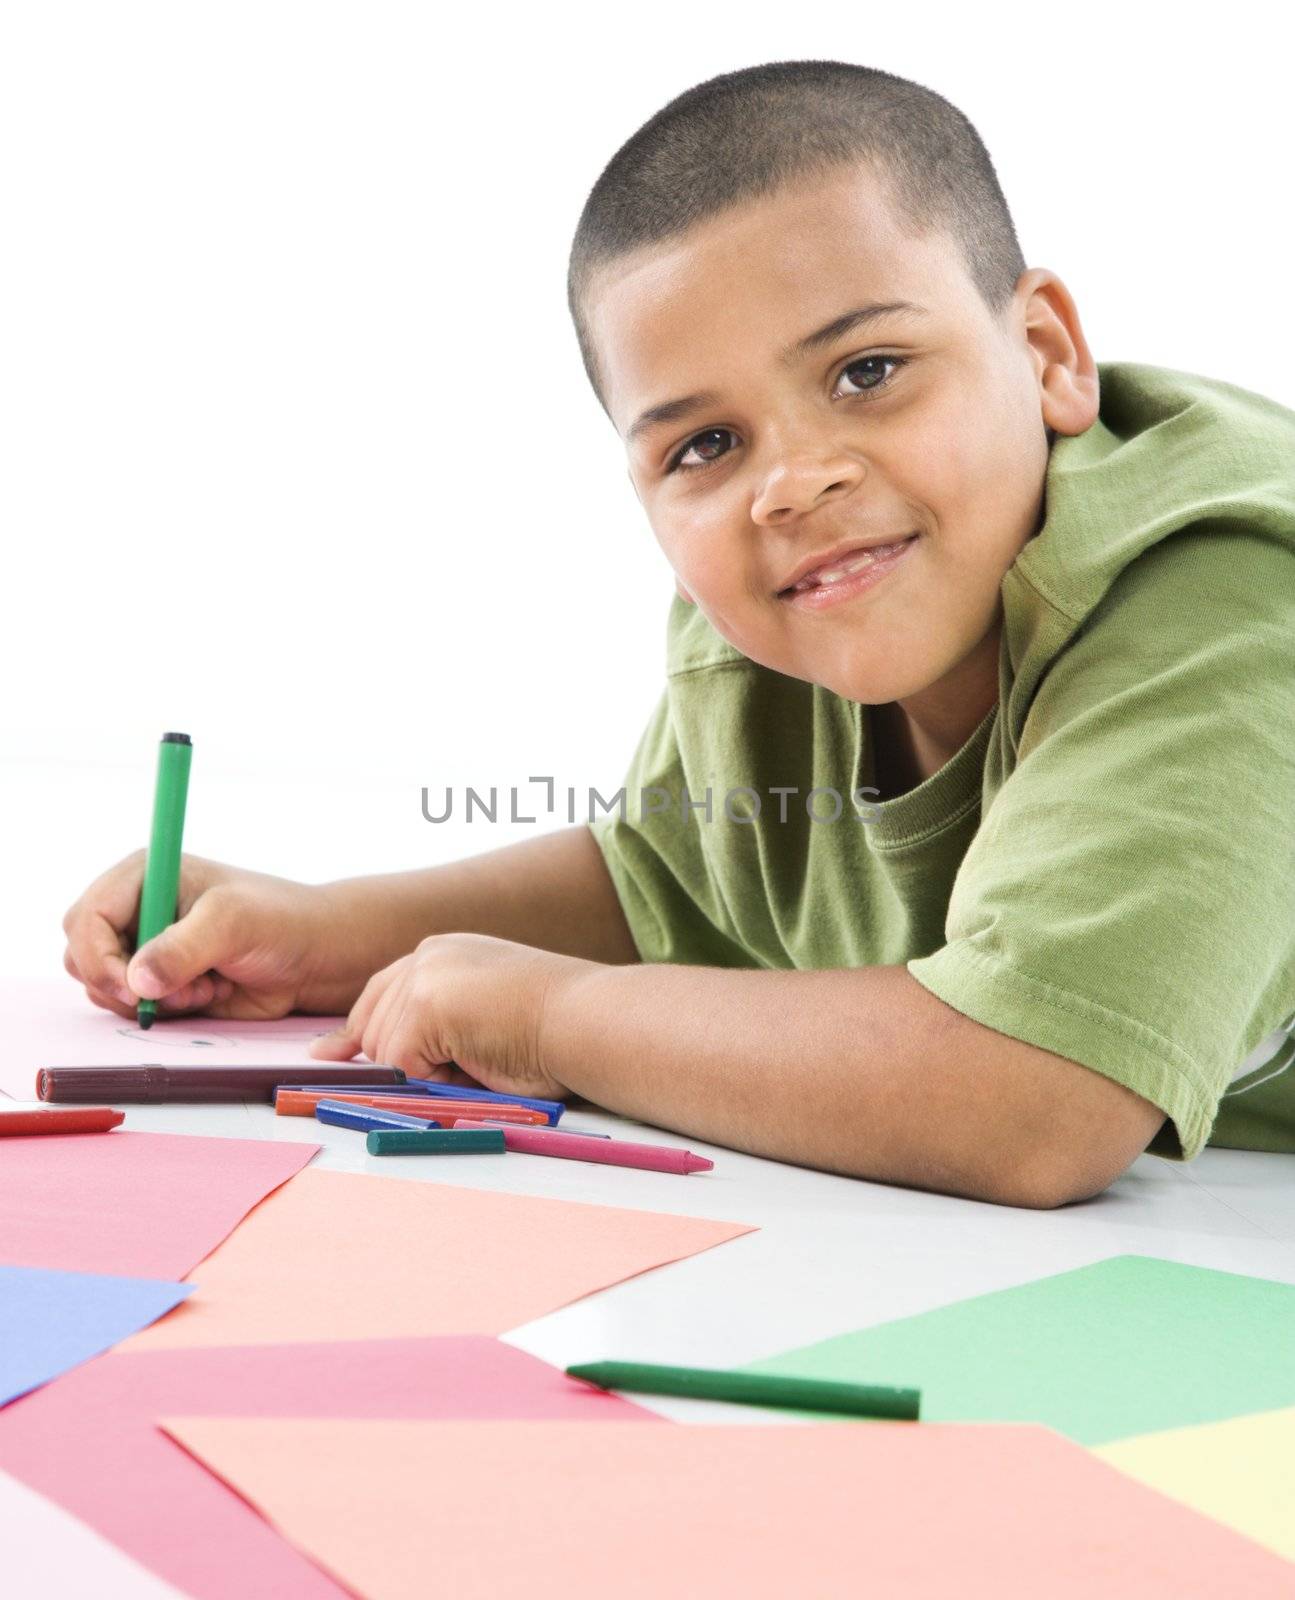 Hispanic boy coloring. by iofoto